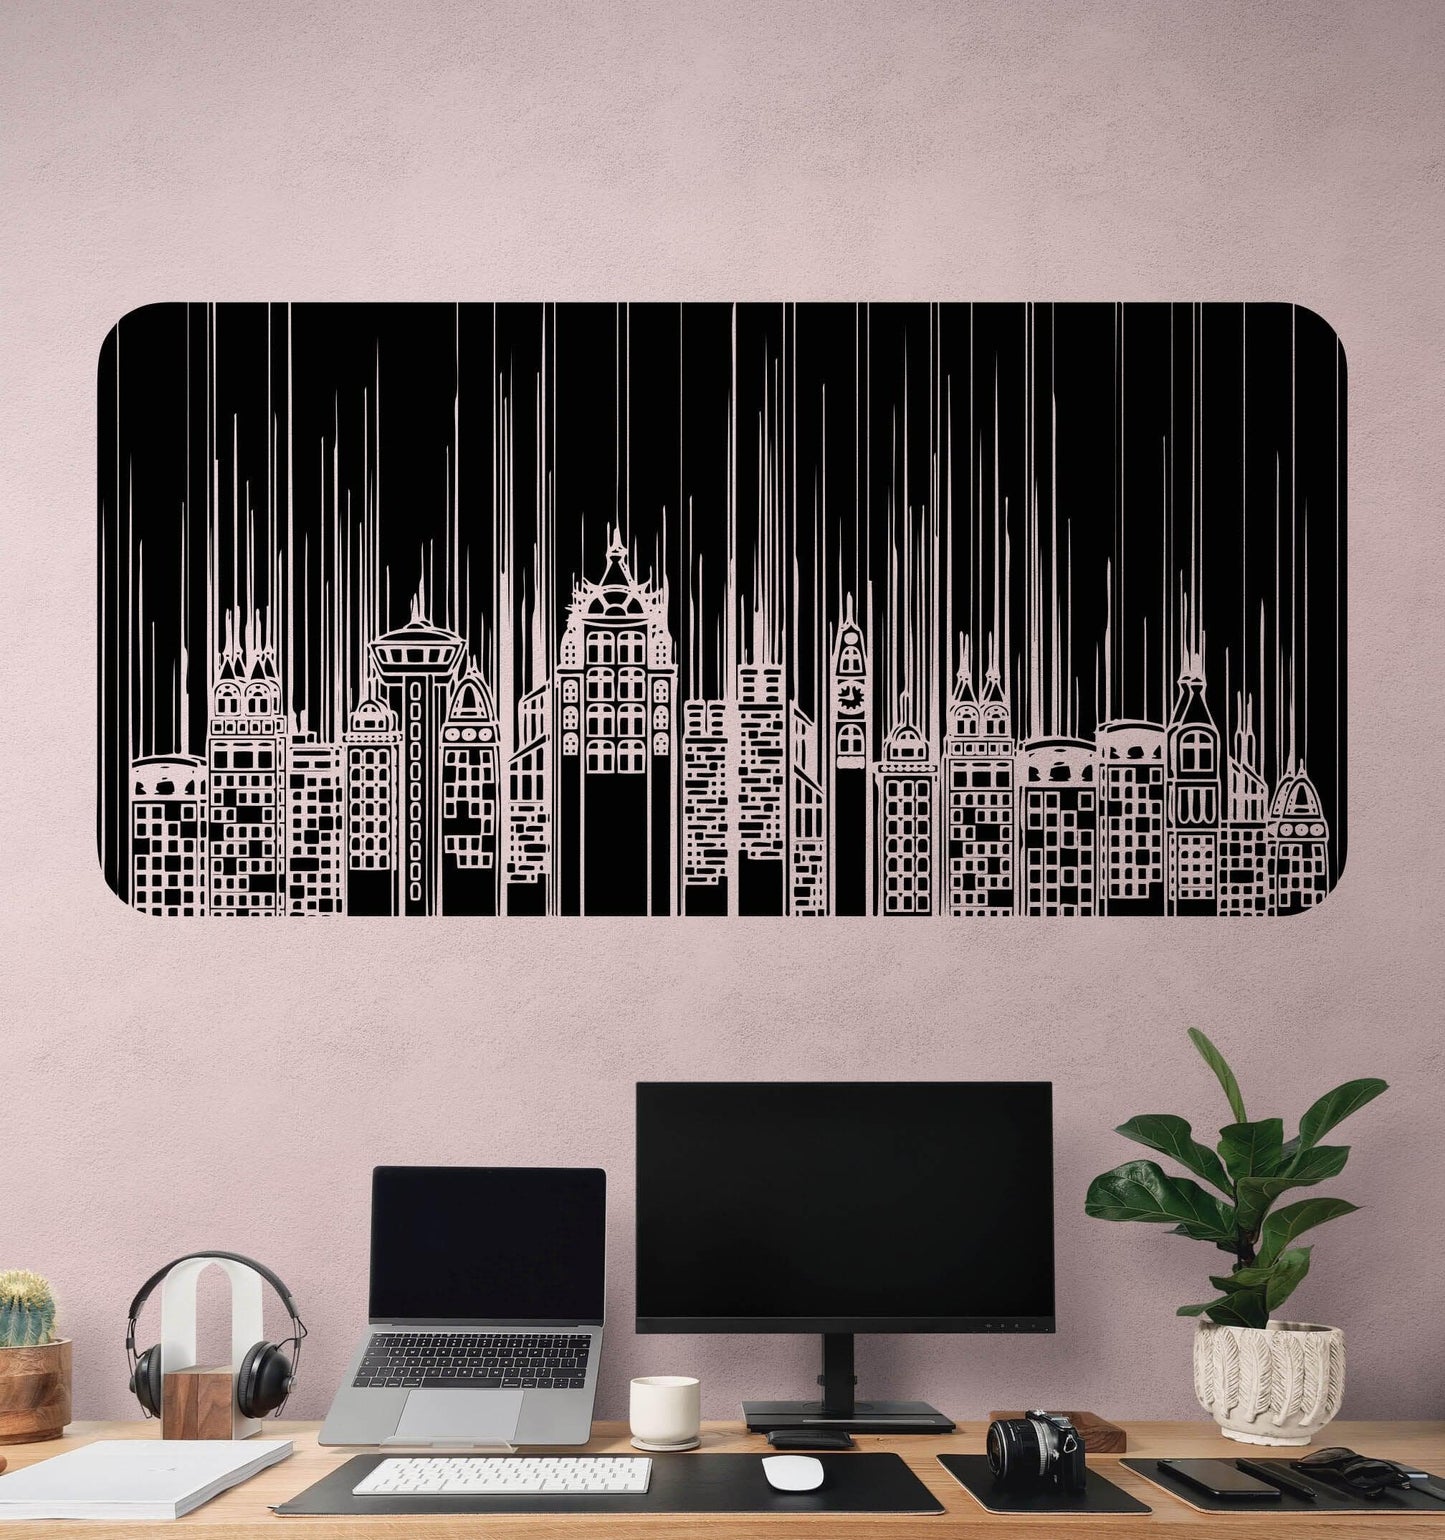 Cyber City Wall Decal Sticker. Skyscrapers / Buildings Urban Theme Cityscape Line Art Design. #5257